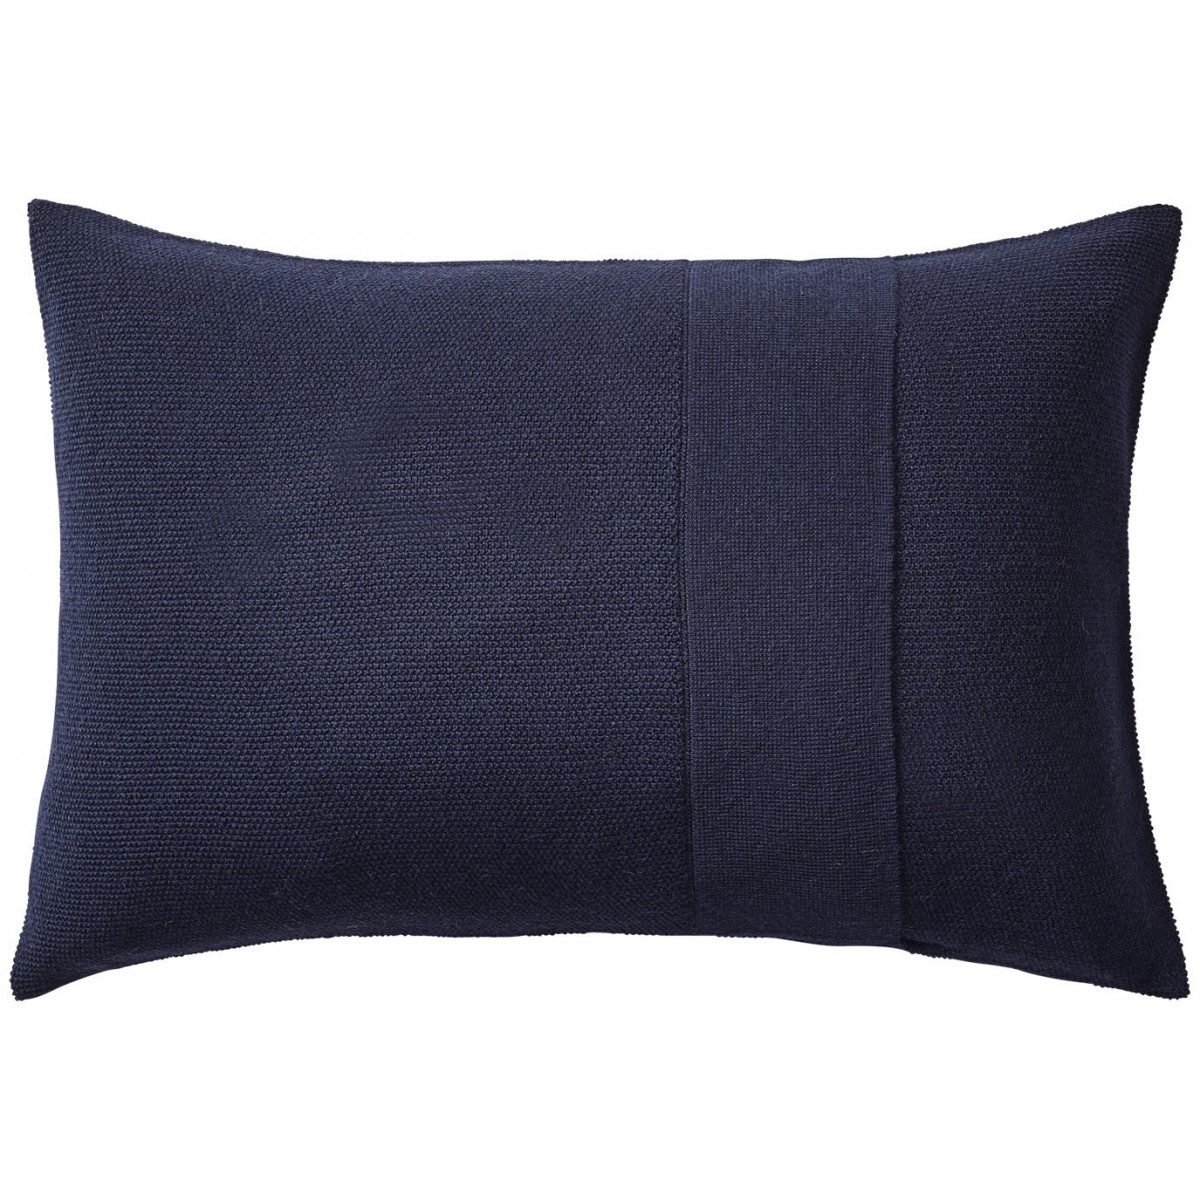 Layer cushion - 60 x 40 cm - midnight blue